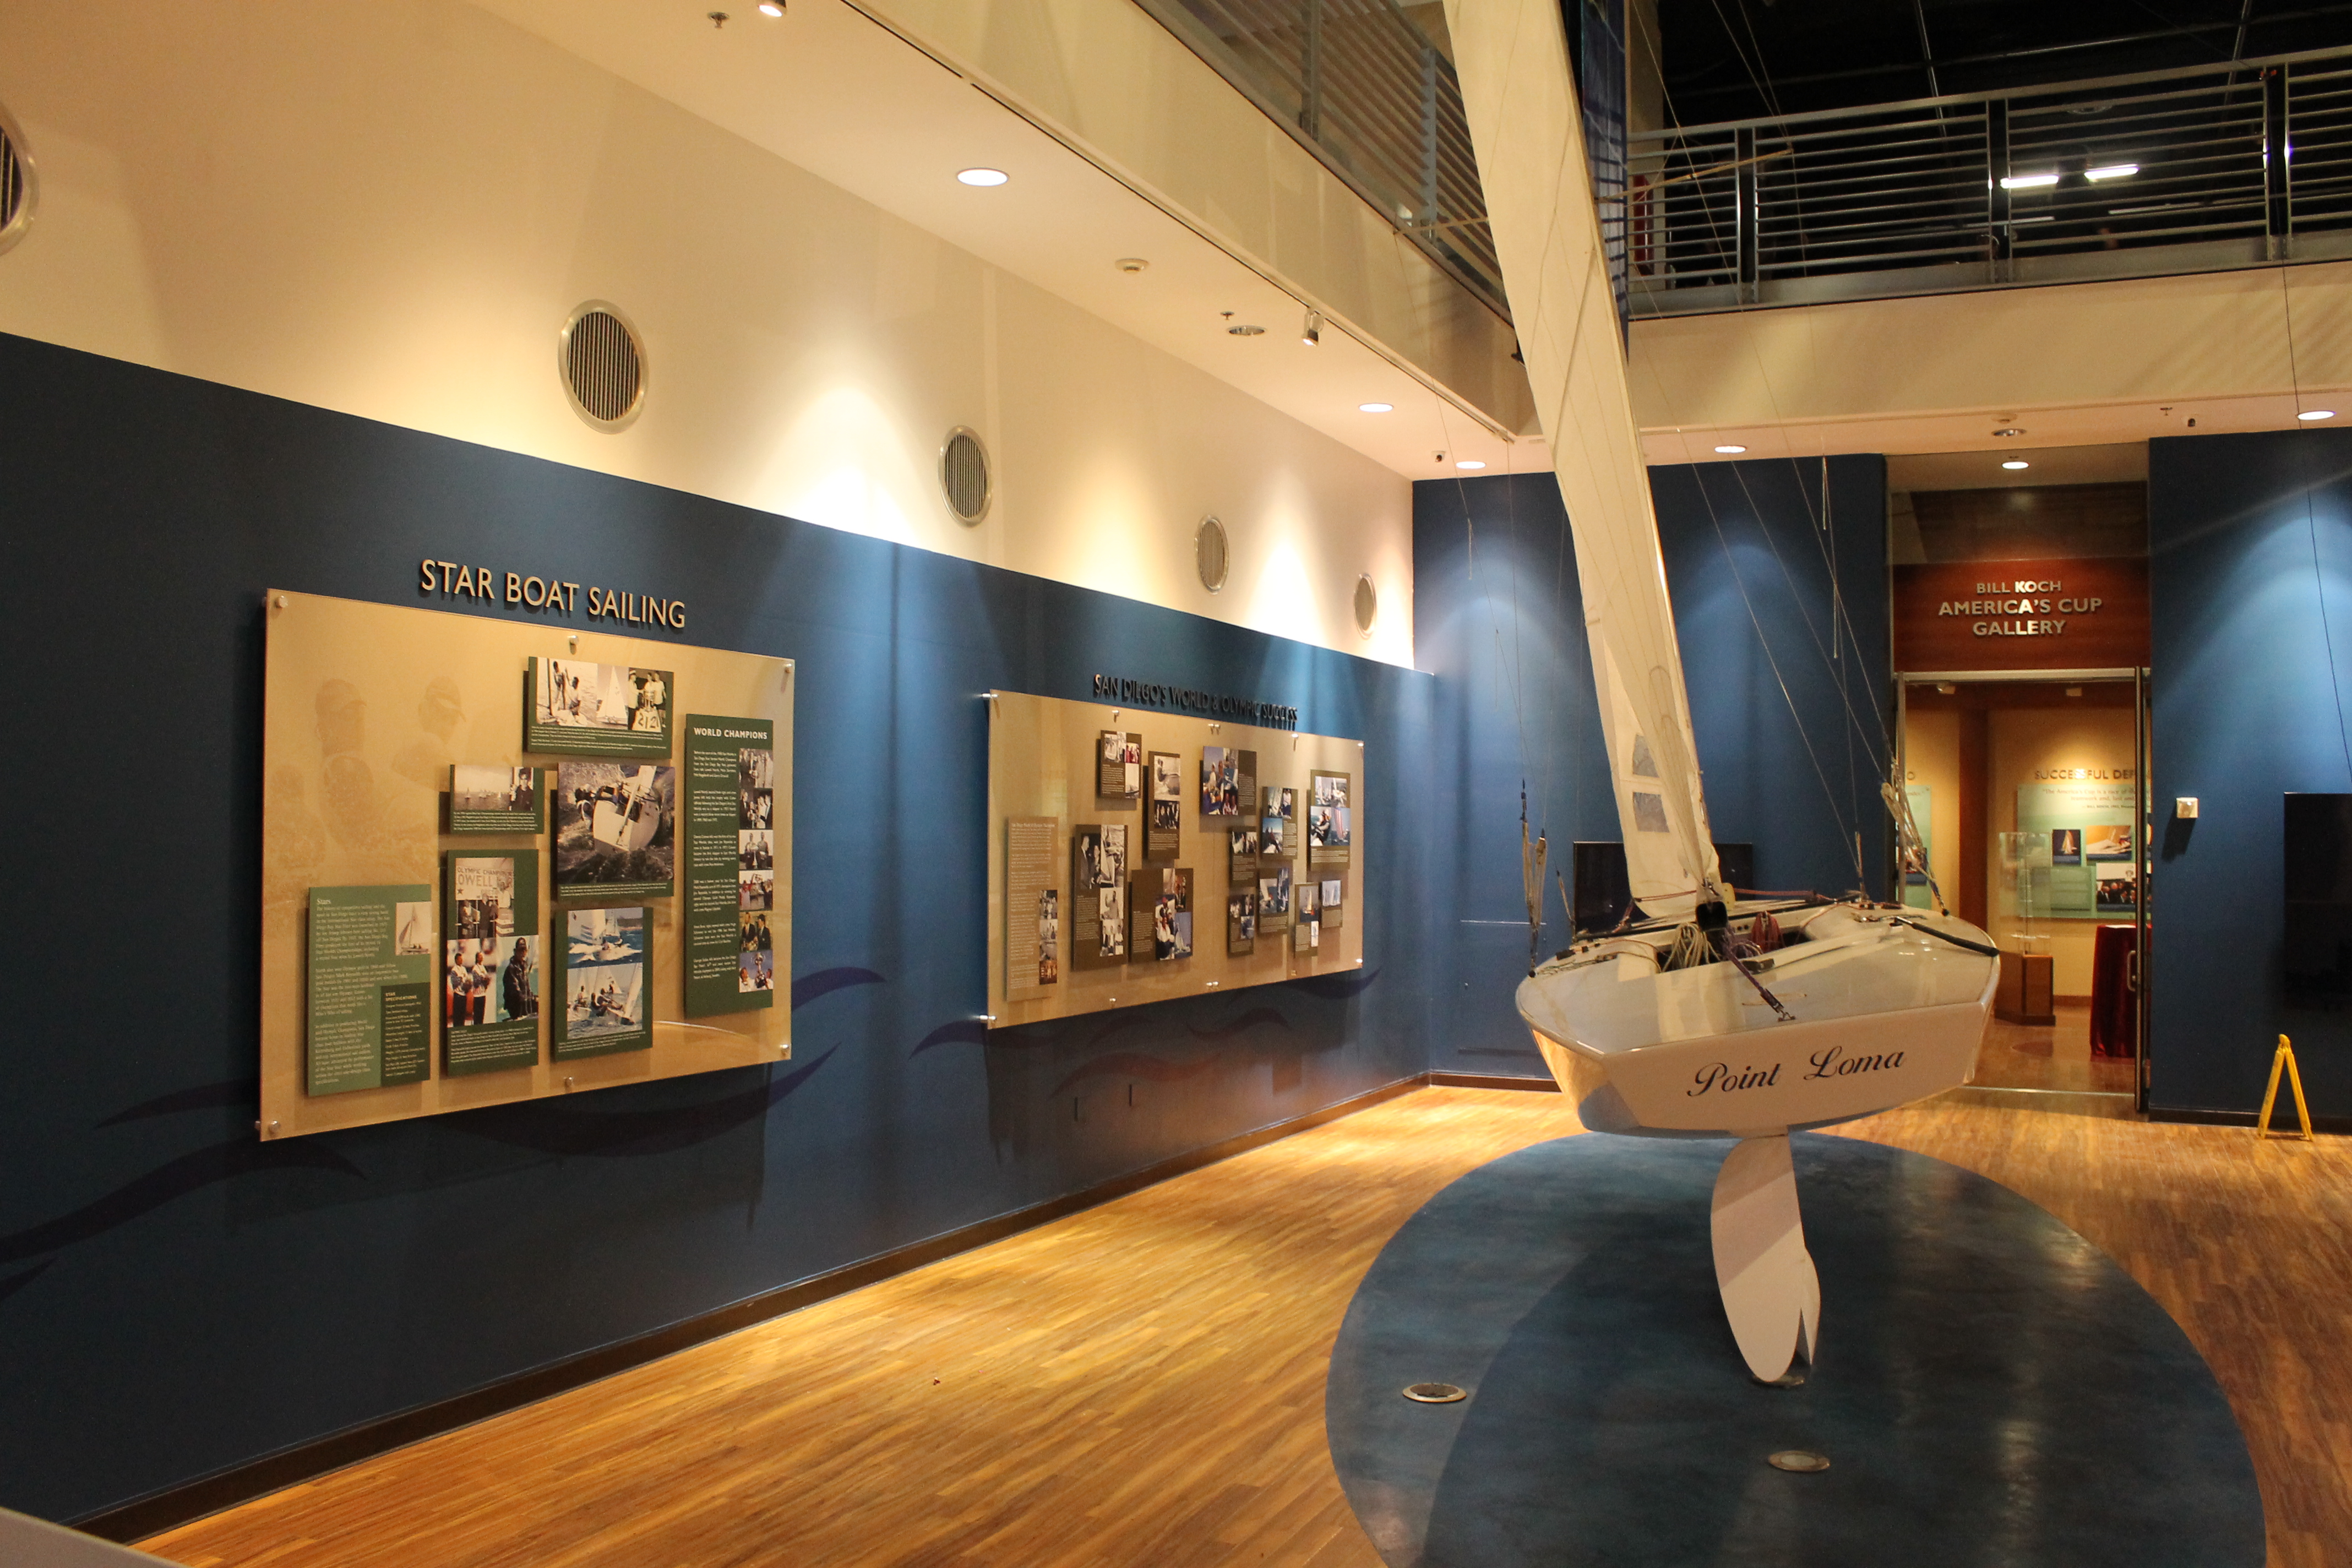 Theater Foyer & Sailing Exhibit